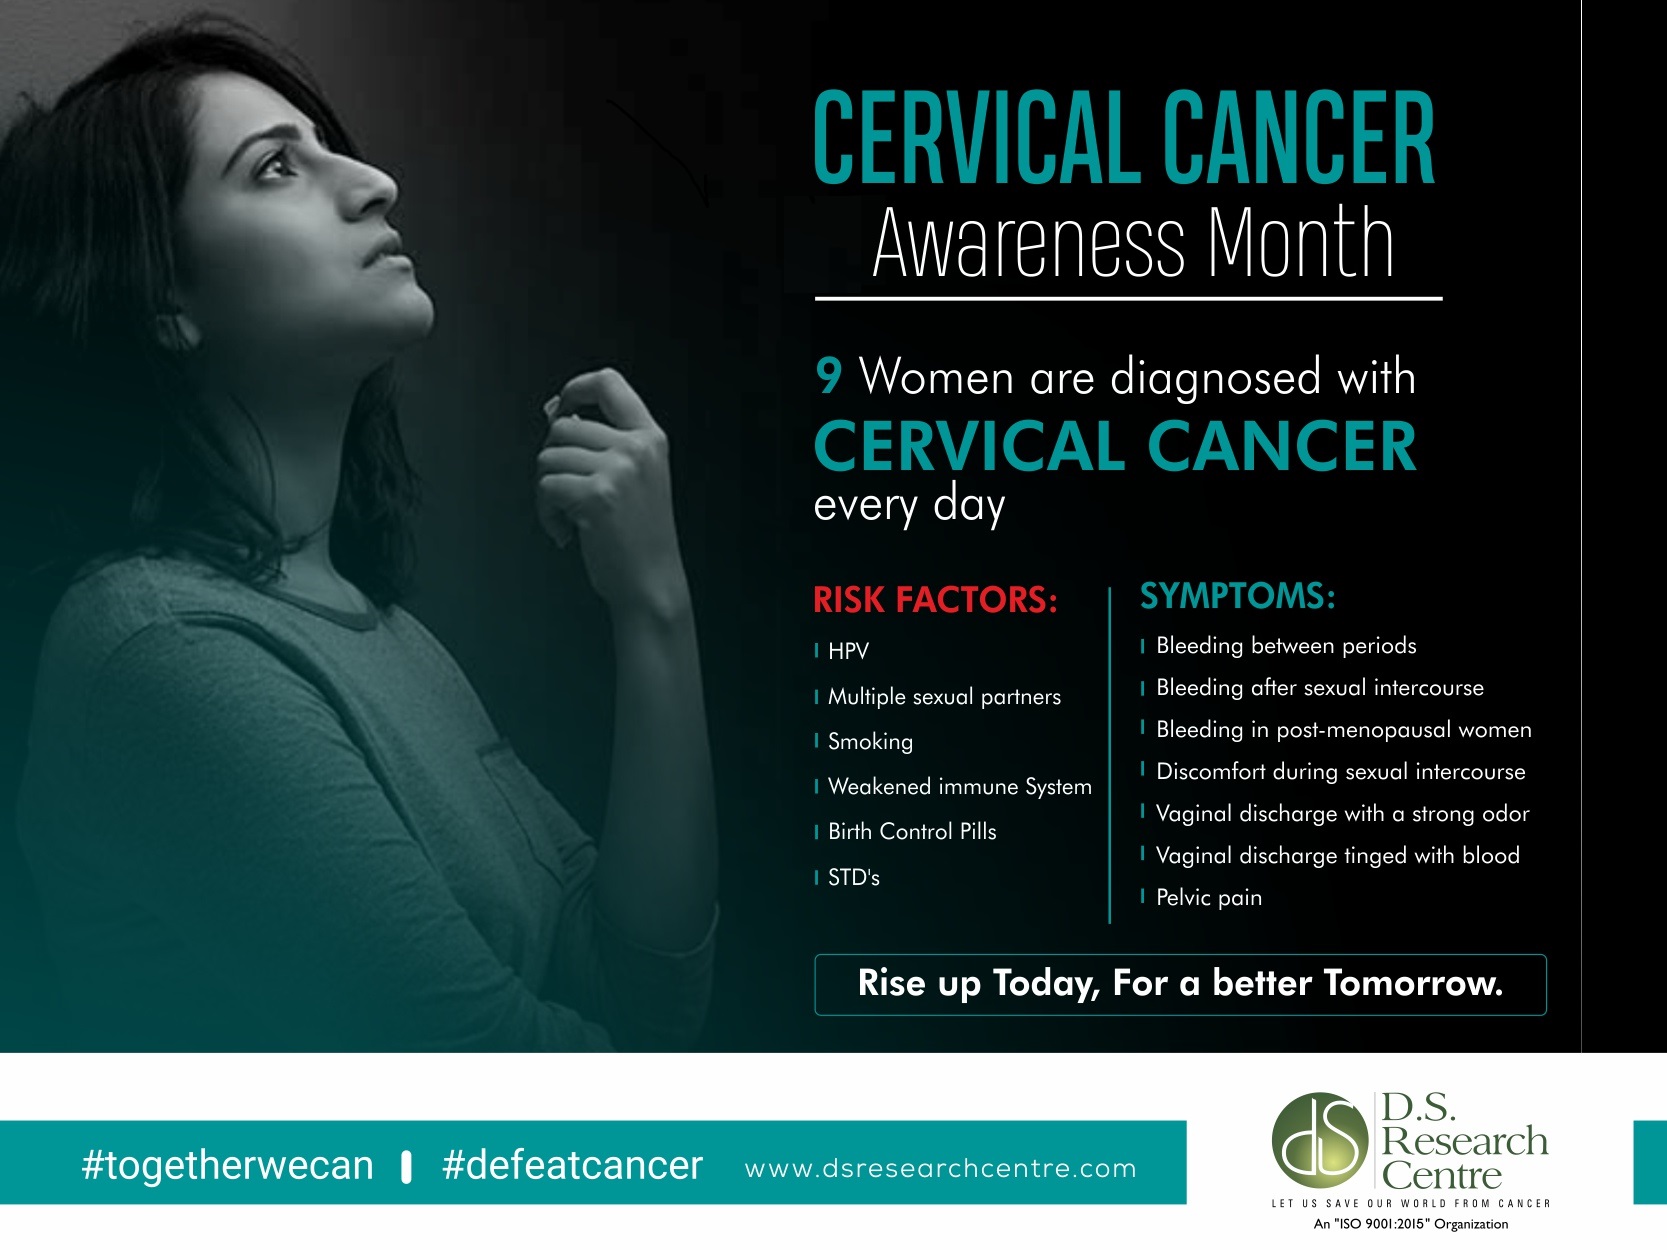 Focusing on keeping Cervical Cancer at Bay